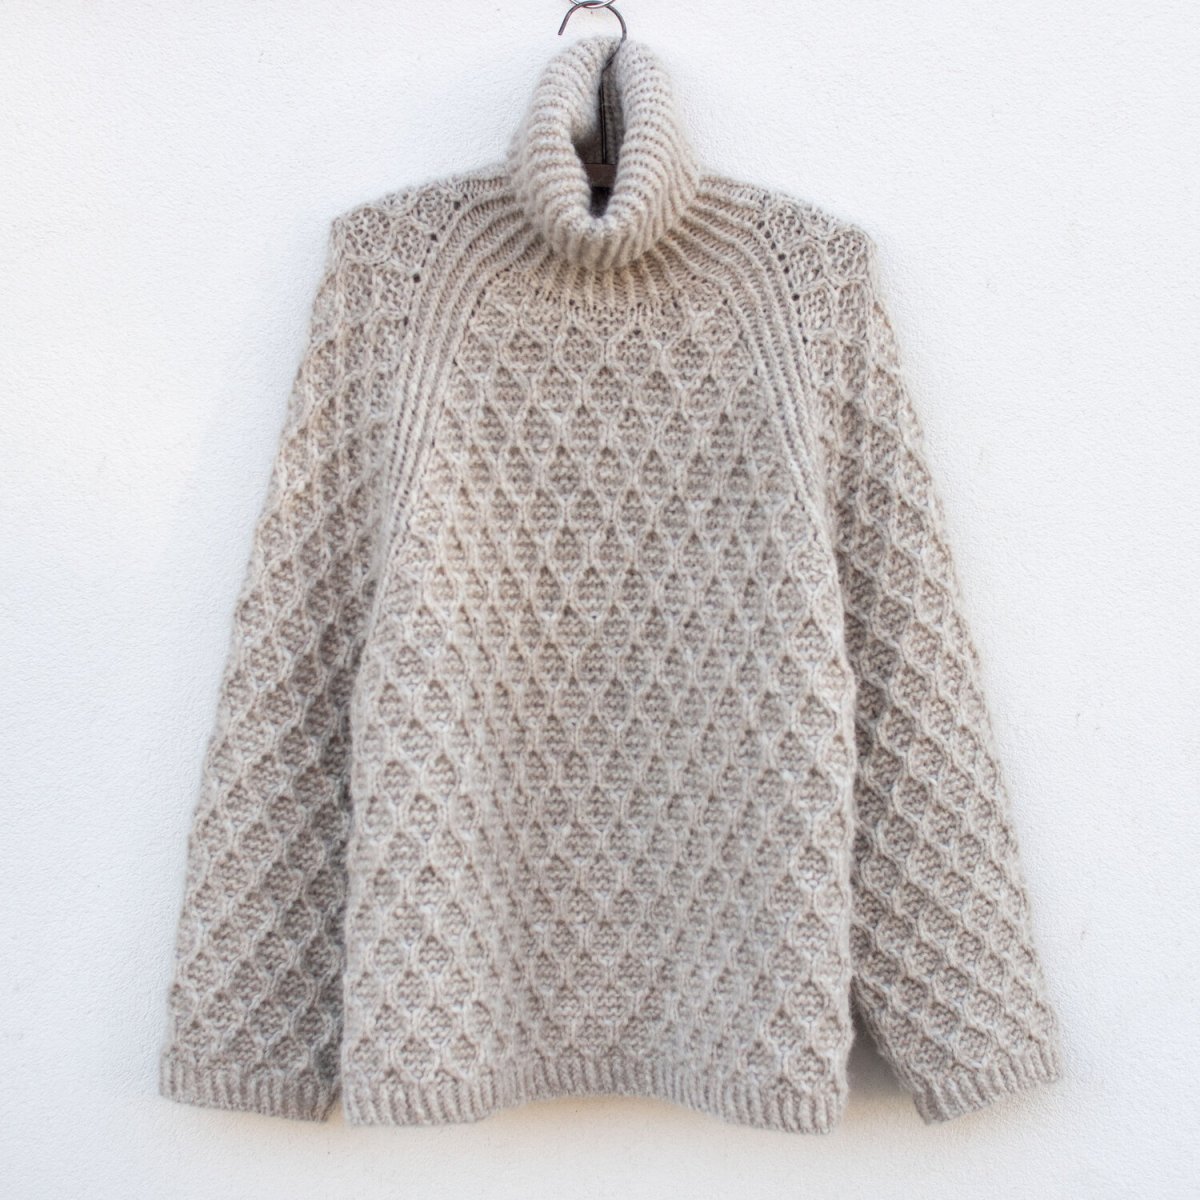 DIAMOND JUMPER - English knitting pattern by Anne Ventzel